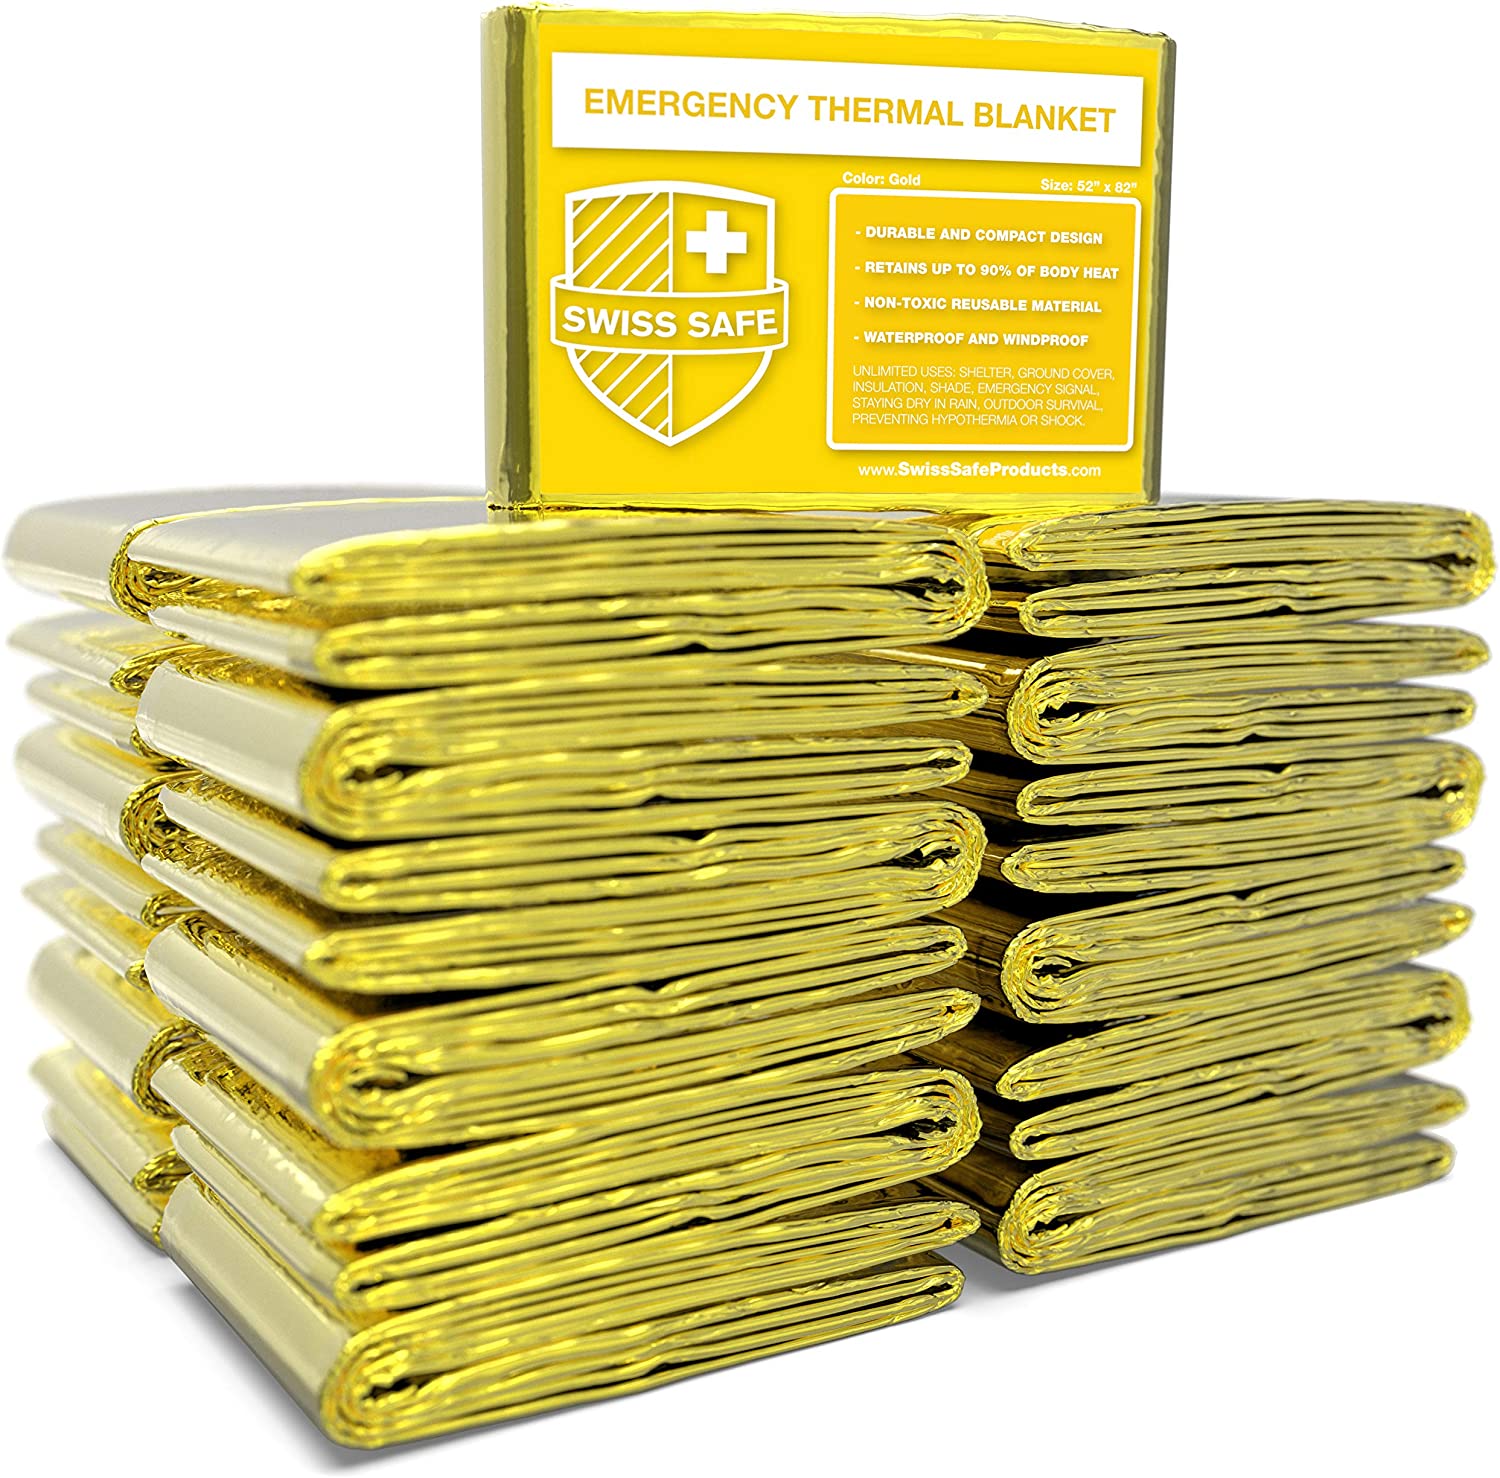 Swiss Safe Emergency Mylar Thermal Blankets + Bonus Gold Foil Space Blanket. Designed for NASA, Outdoors, Survival, First Aid, Gold, 25 Pack